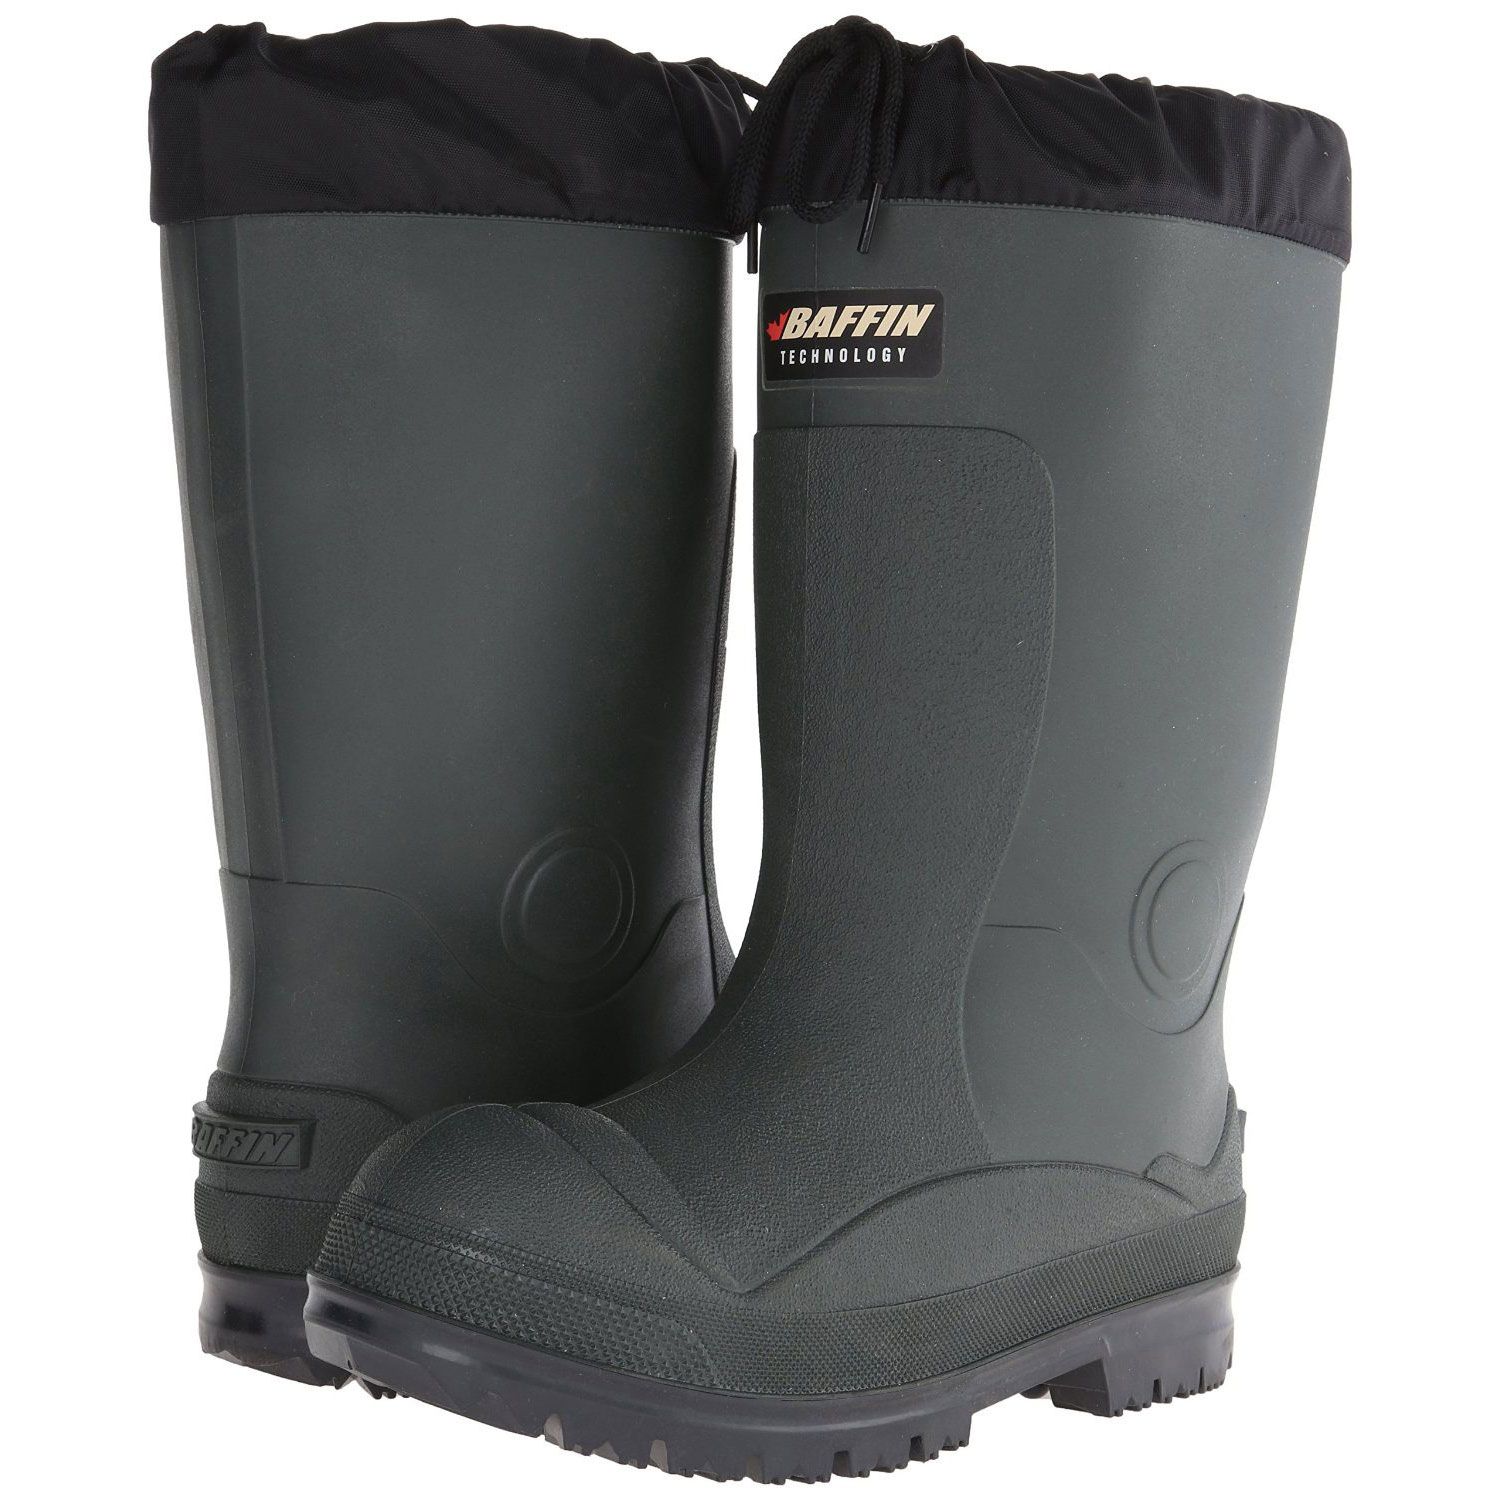 Black, 10 2355-0000-001-10 3021510 Baffin Inc Titan Boots 